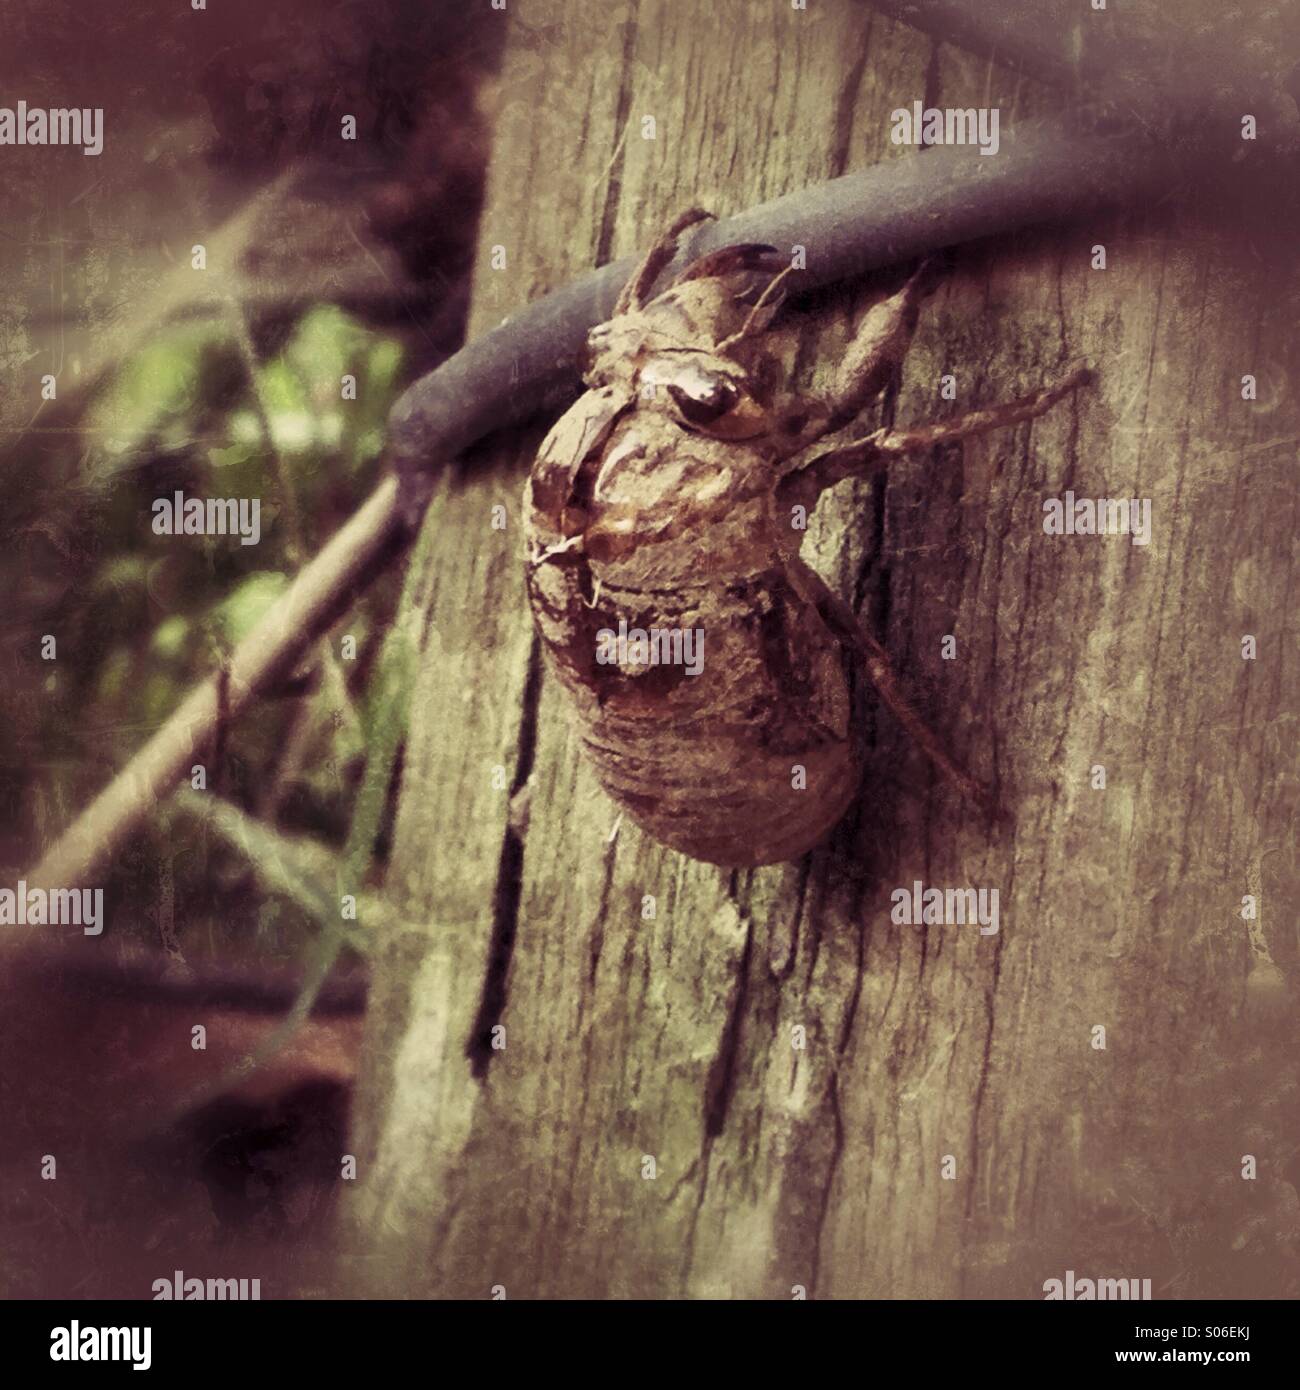 A cicada shell on a fence. Stock Photo